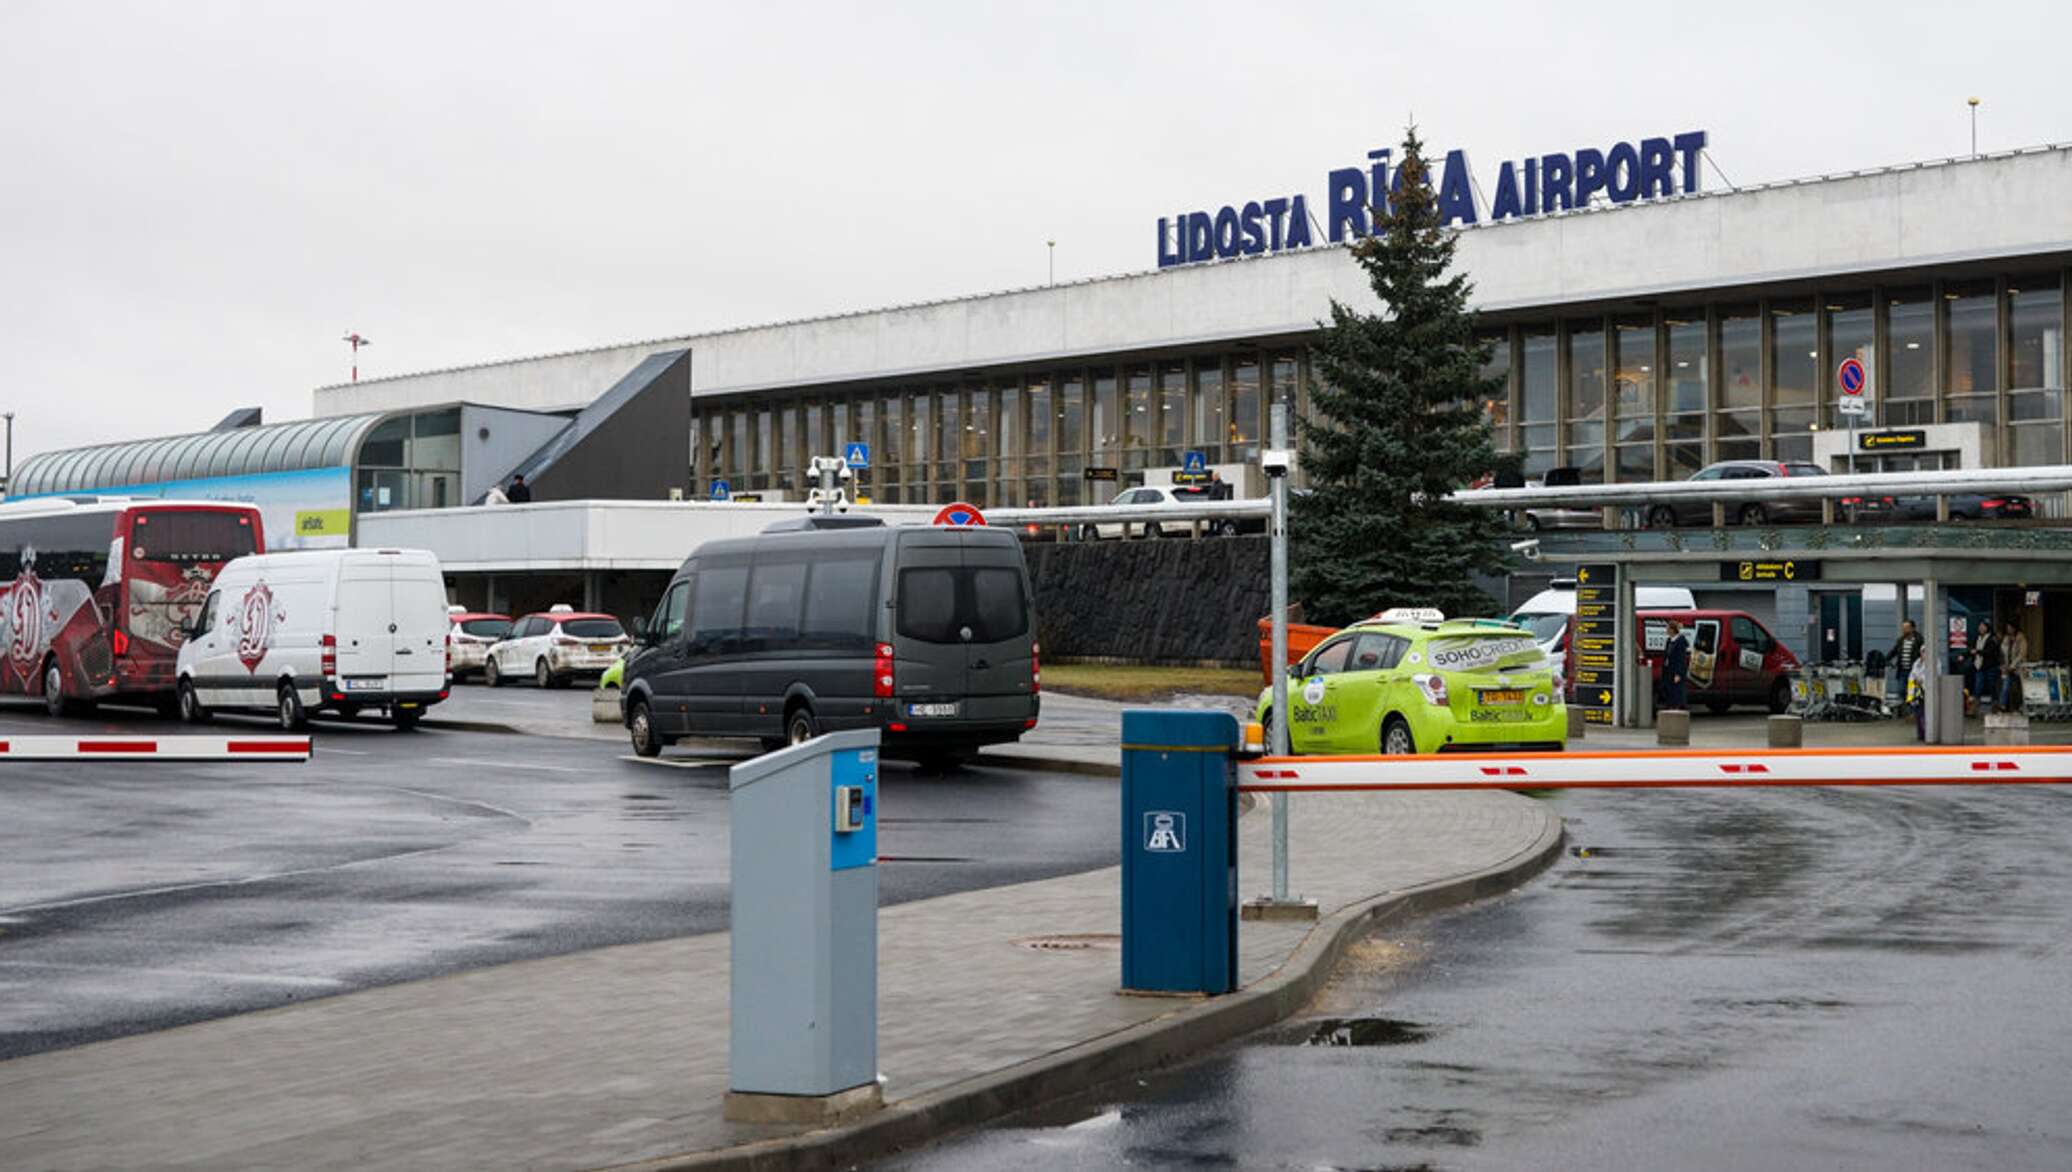 Международный аэропорт рига (rix/evra) - рига, латвия (lv)